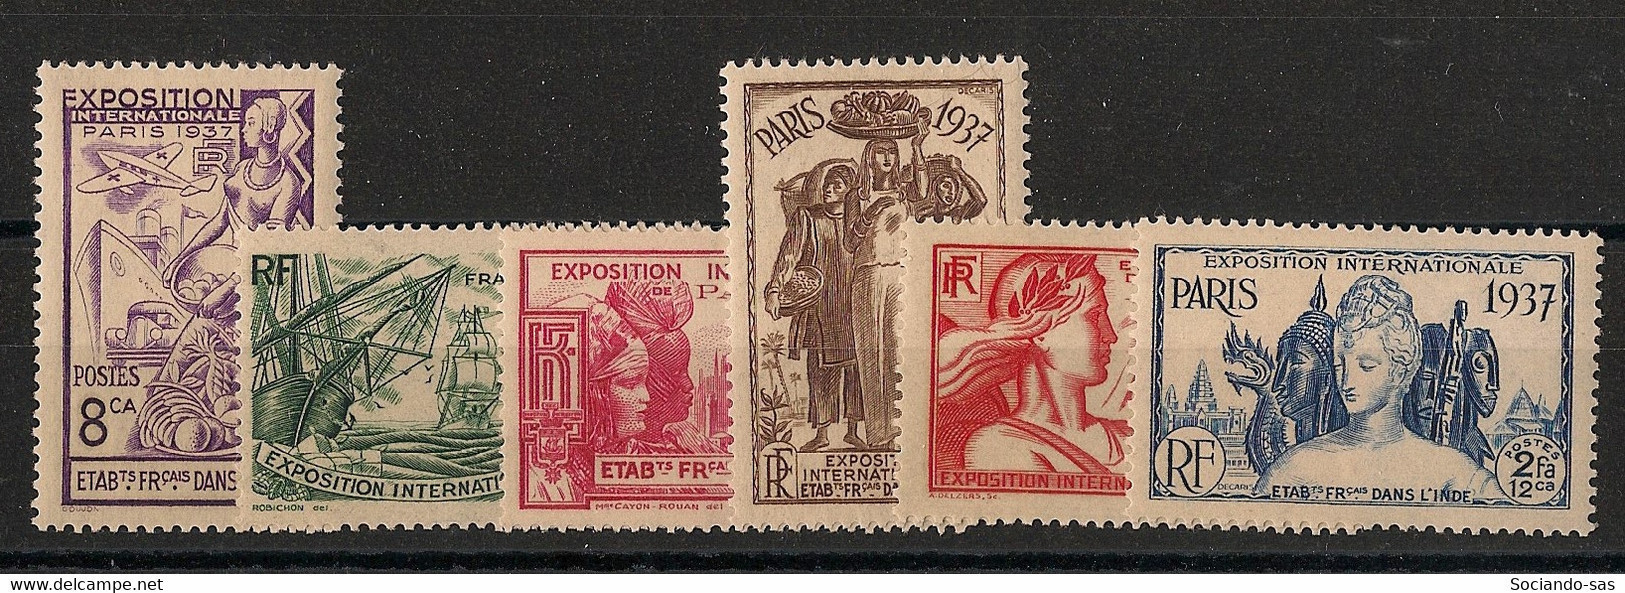 INDE - 1937 - N°YT. 109 à 114 - Série Complète - Exposition Internationale - Neuf Luxe ** / MNH / Postfrisch - Neufs